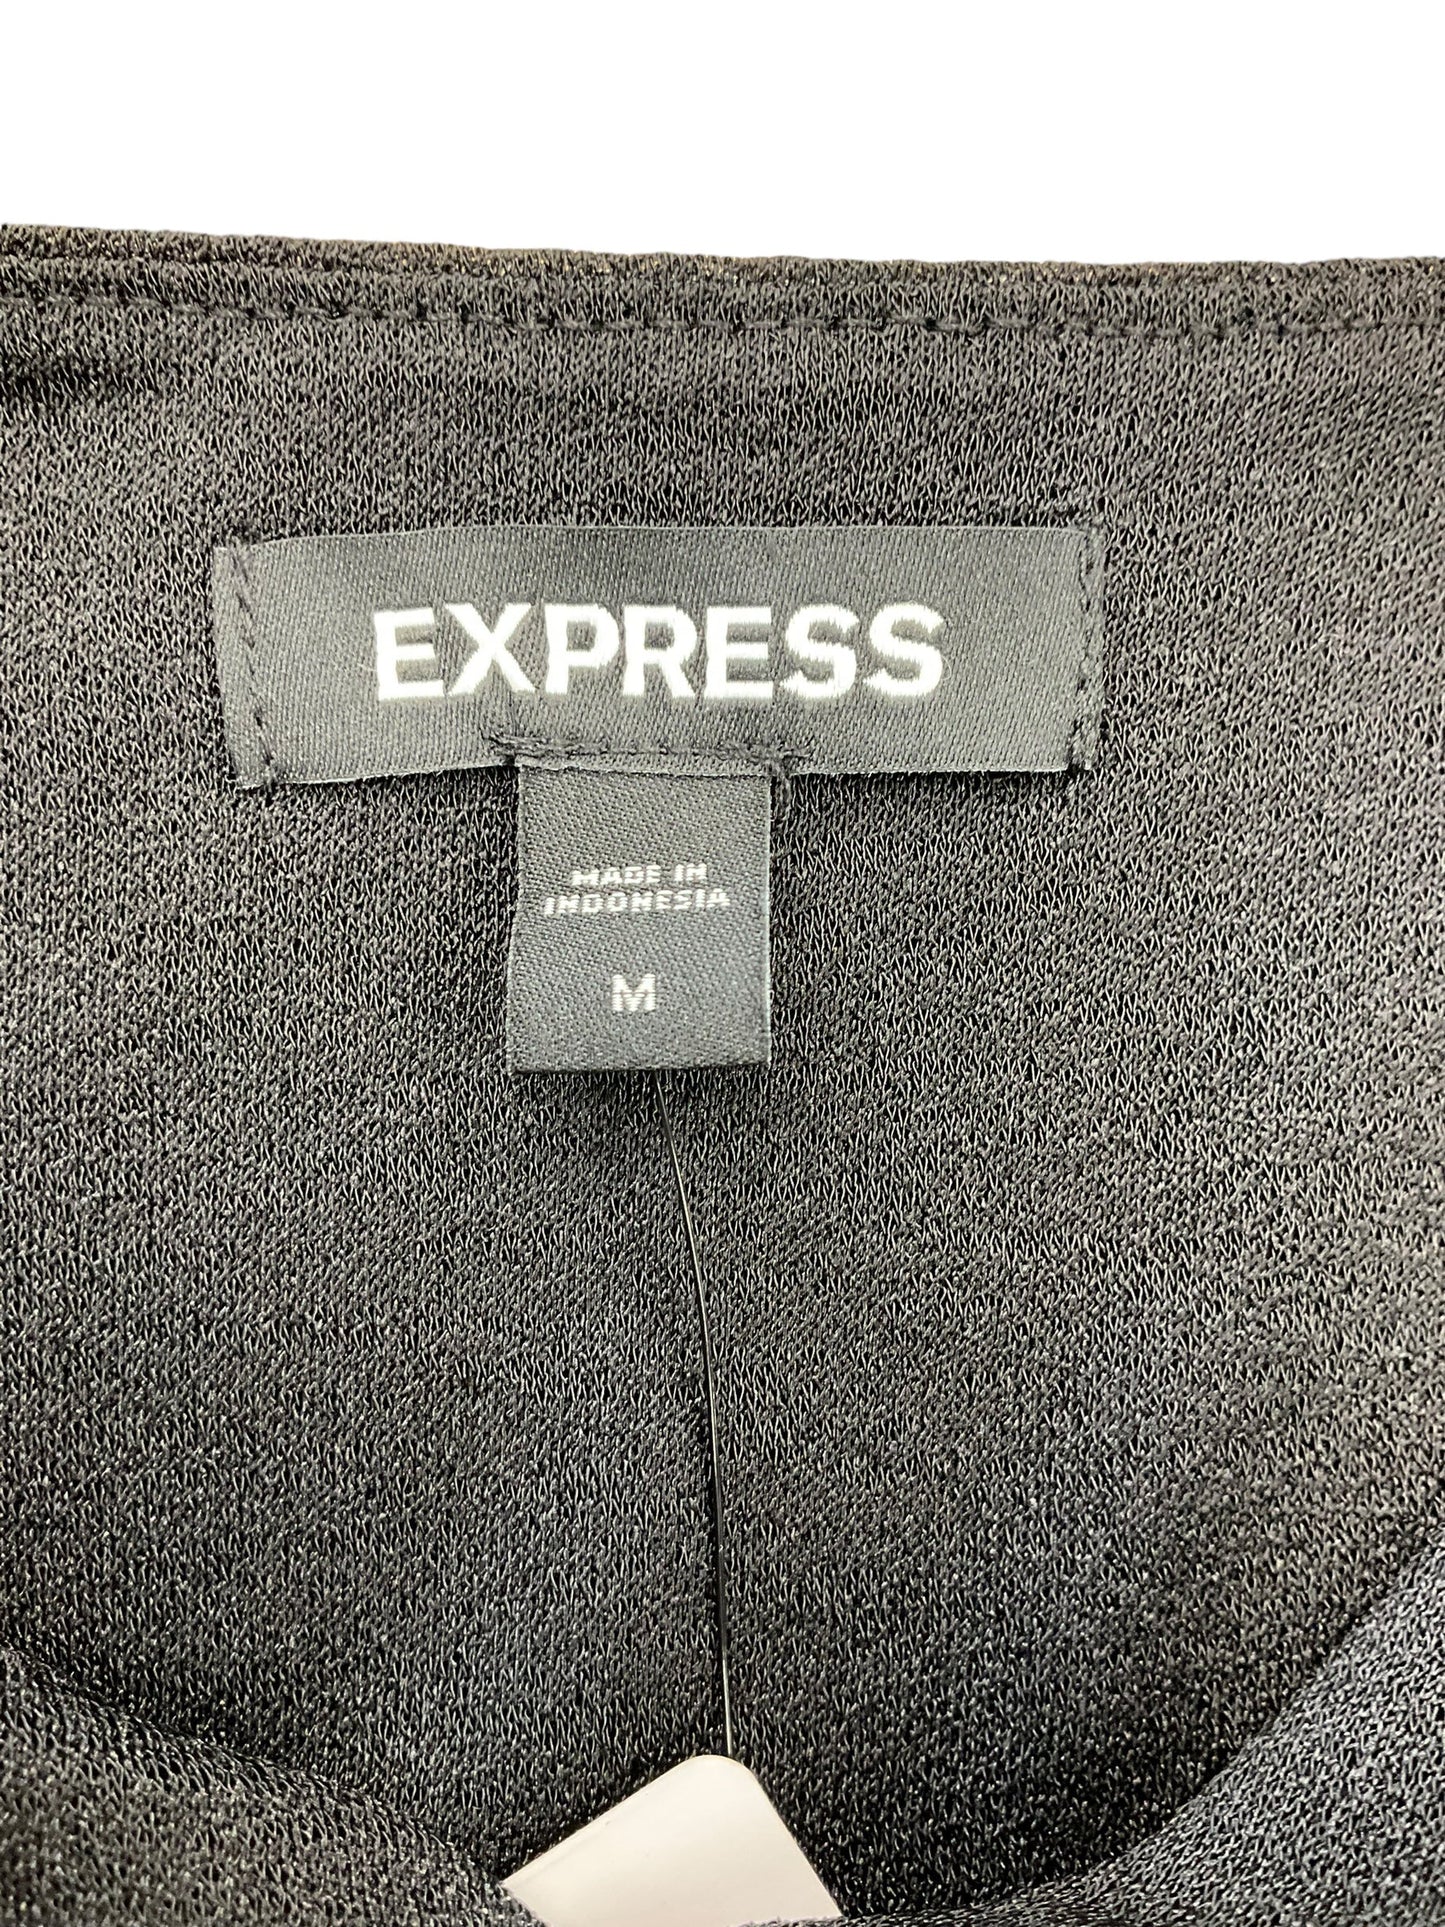 Black Top Short Sleeve Express, Size M